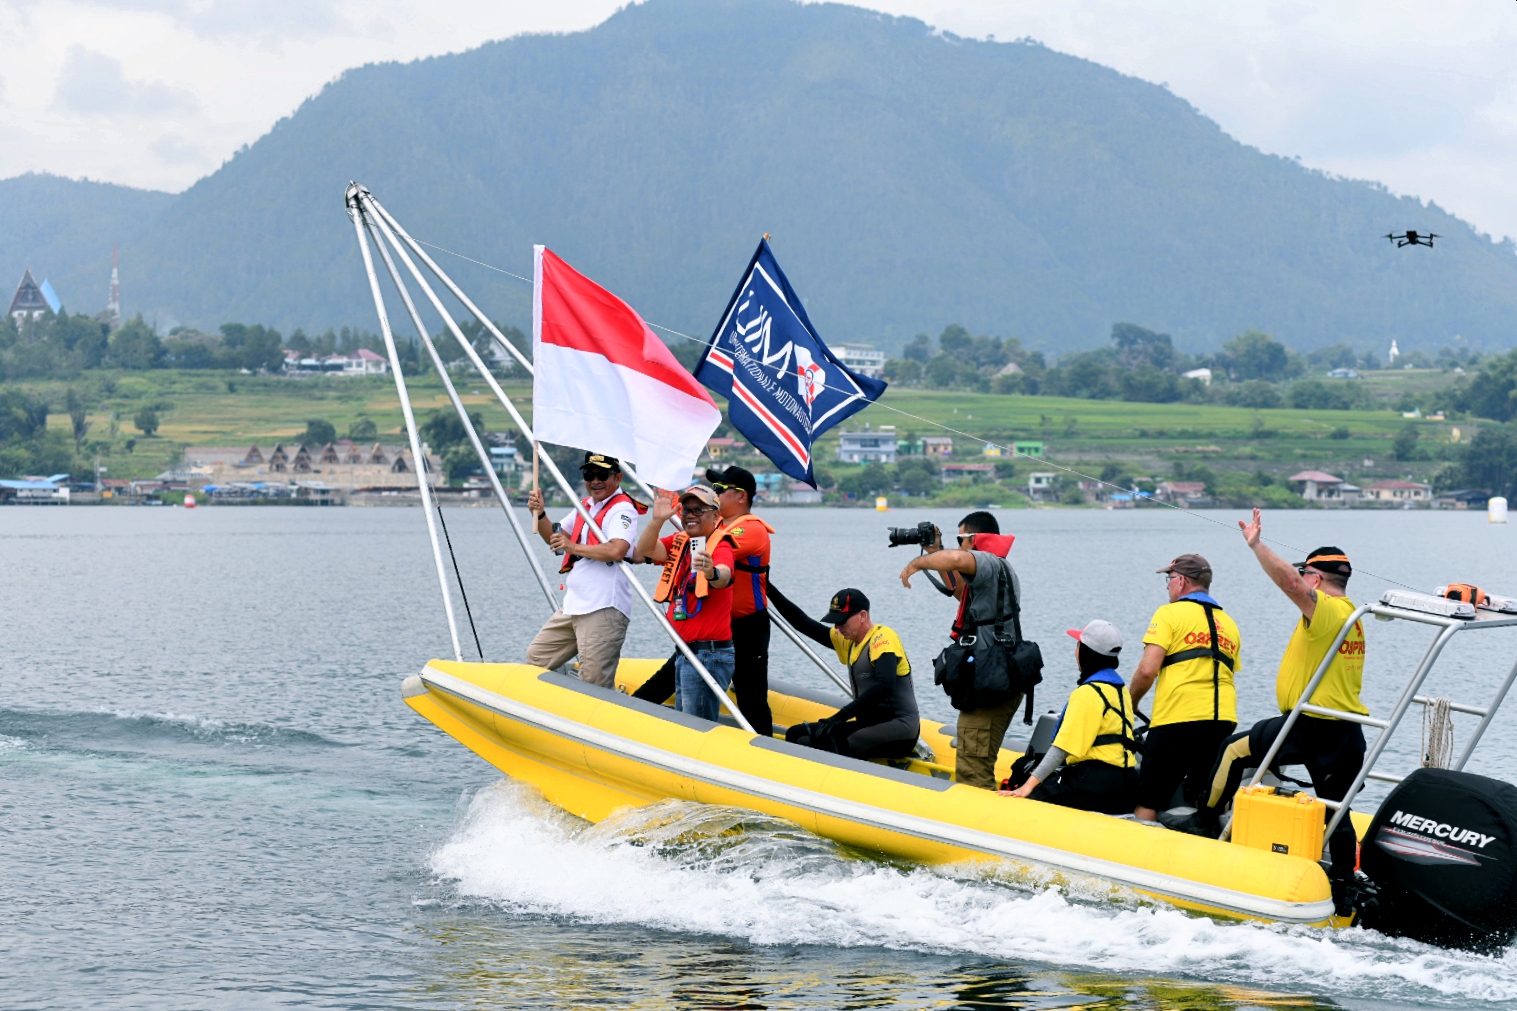 Disambut Riuh Ribuan Penonton, Pj Gubernur Sumut Pimpin Lap Parade F1 Powerboat dan Kibarkan Bendera Merah Putih